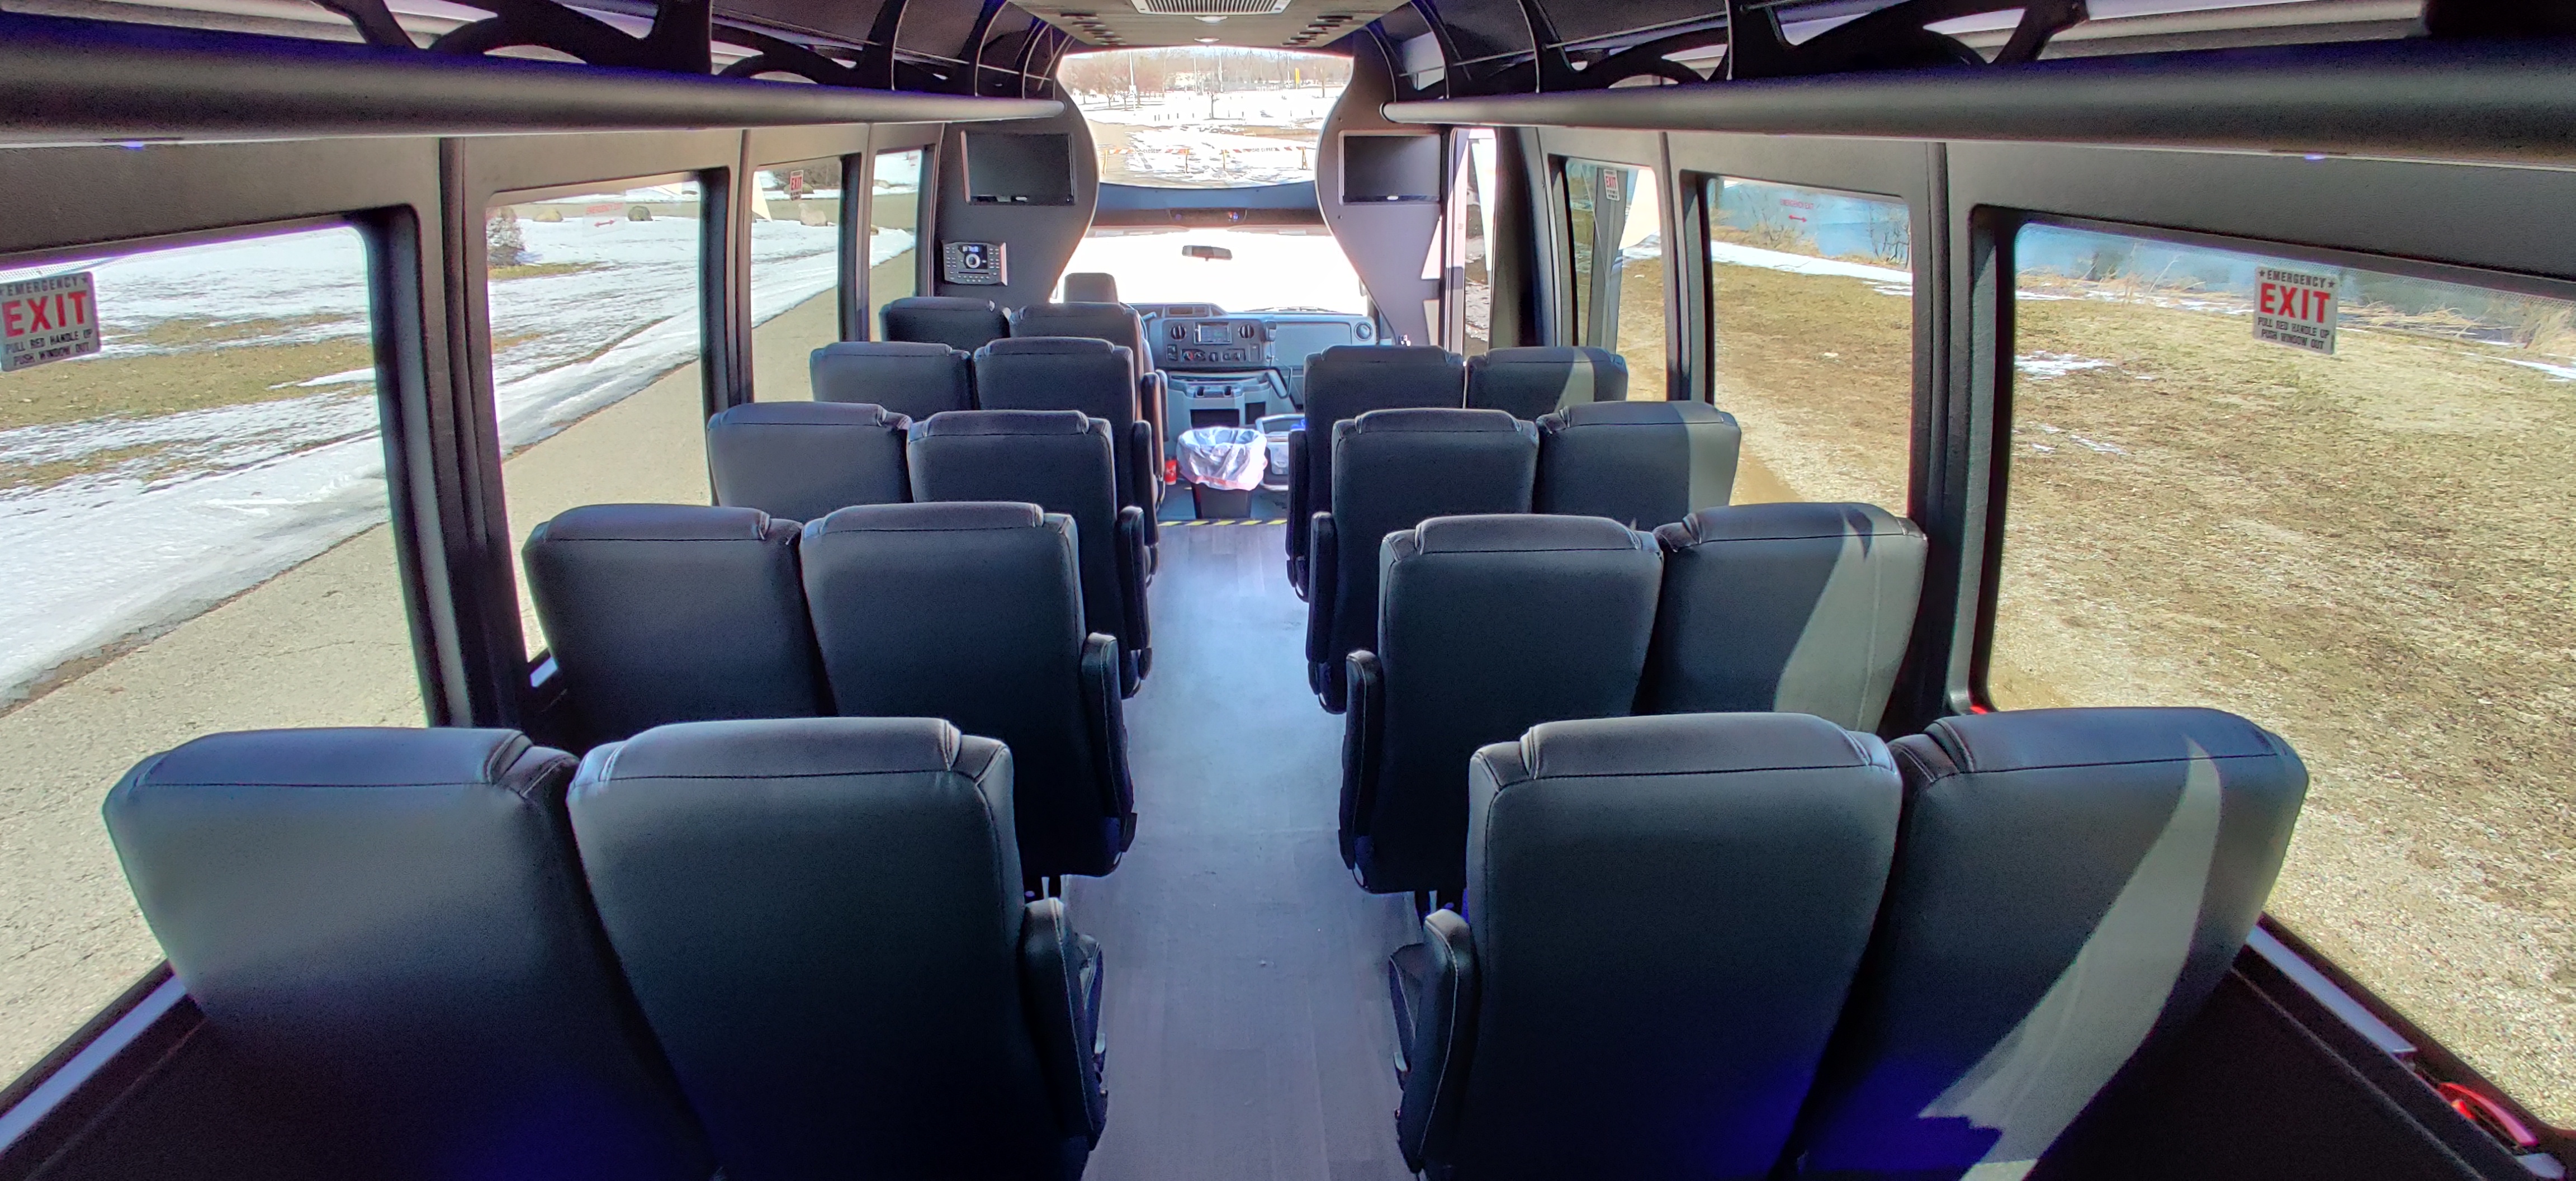 26 Passenger Executive Shuttle Bus Interior 4